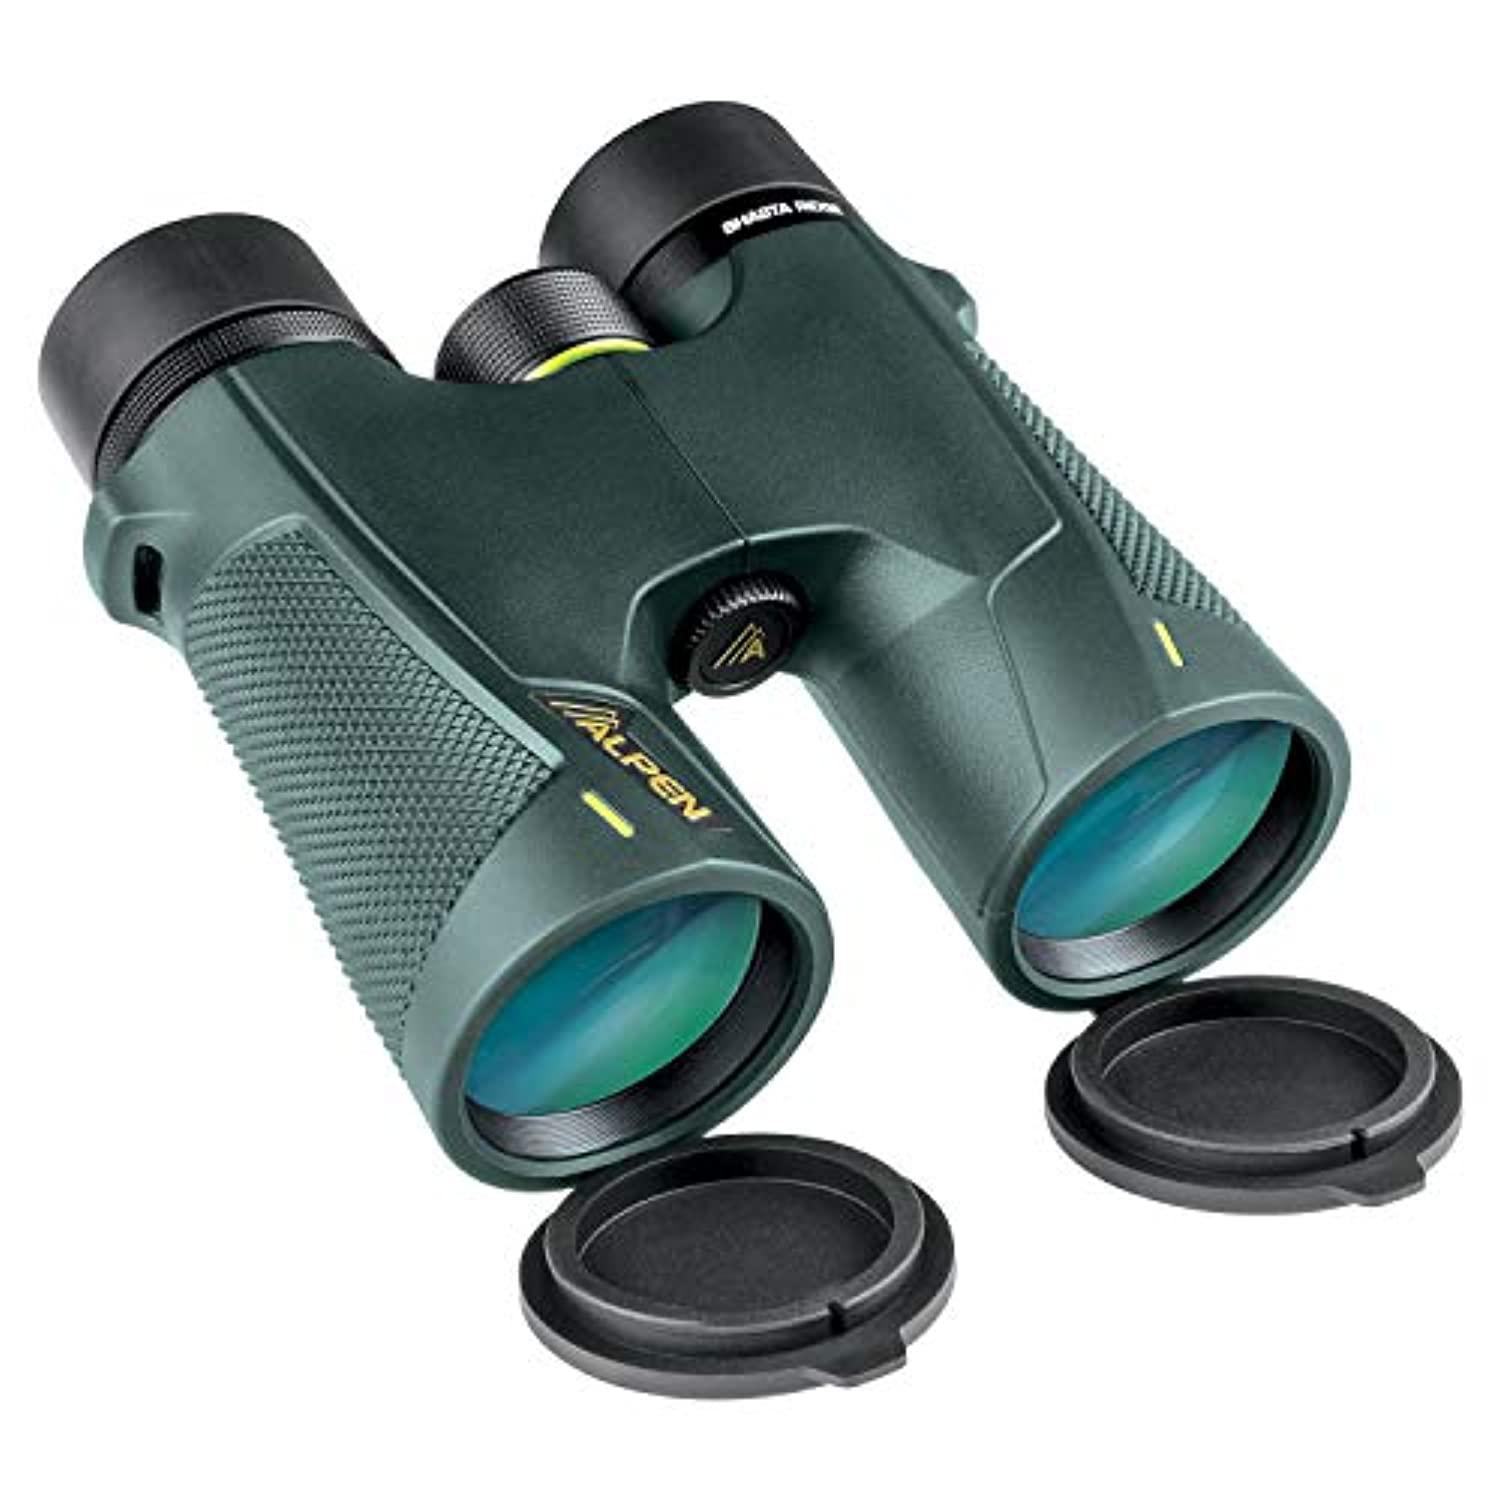 alpen shasta ridge 8x42 waterproof binoculars with bak4 optics